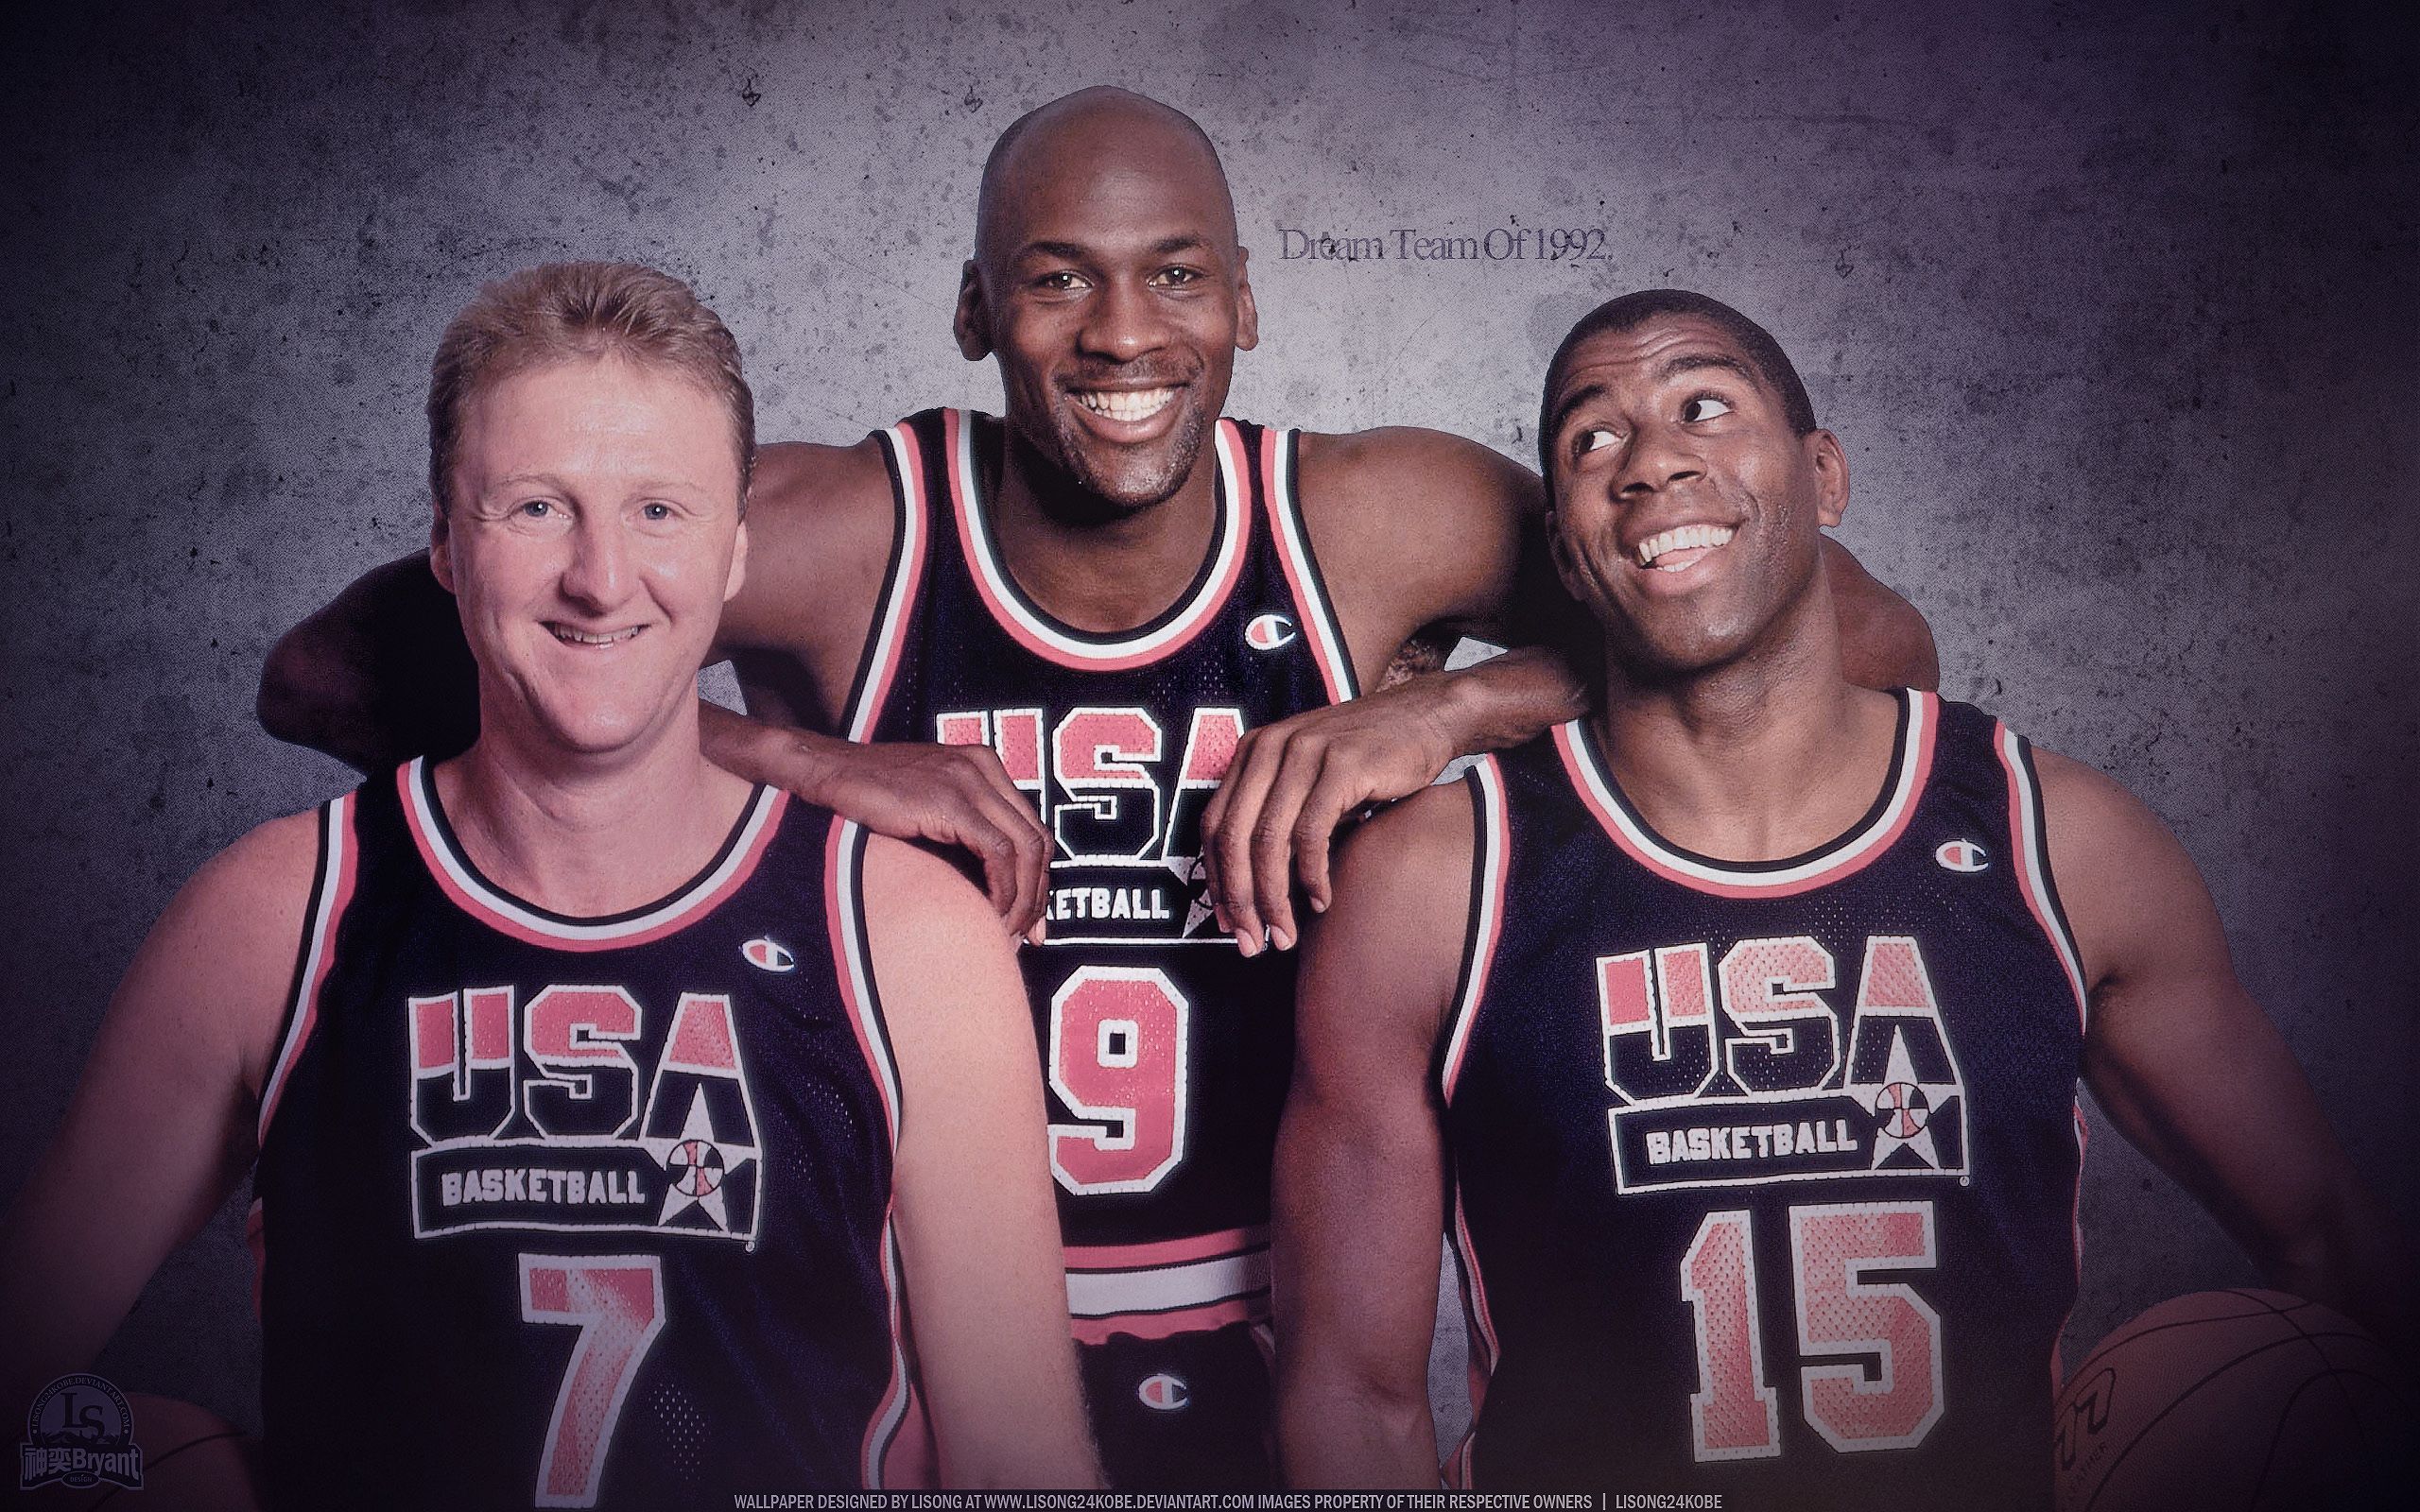 Larry Bird, Michael Jordan, and Magic Johnson on the 1992 Olympic Dream Team. - Michael Jordan